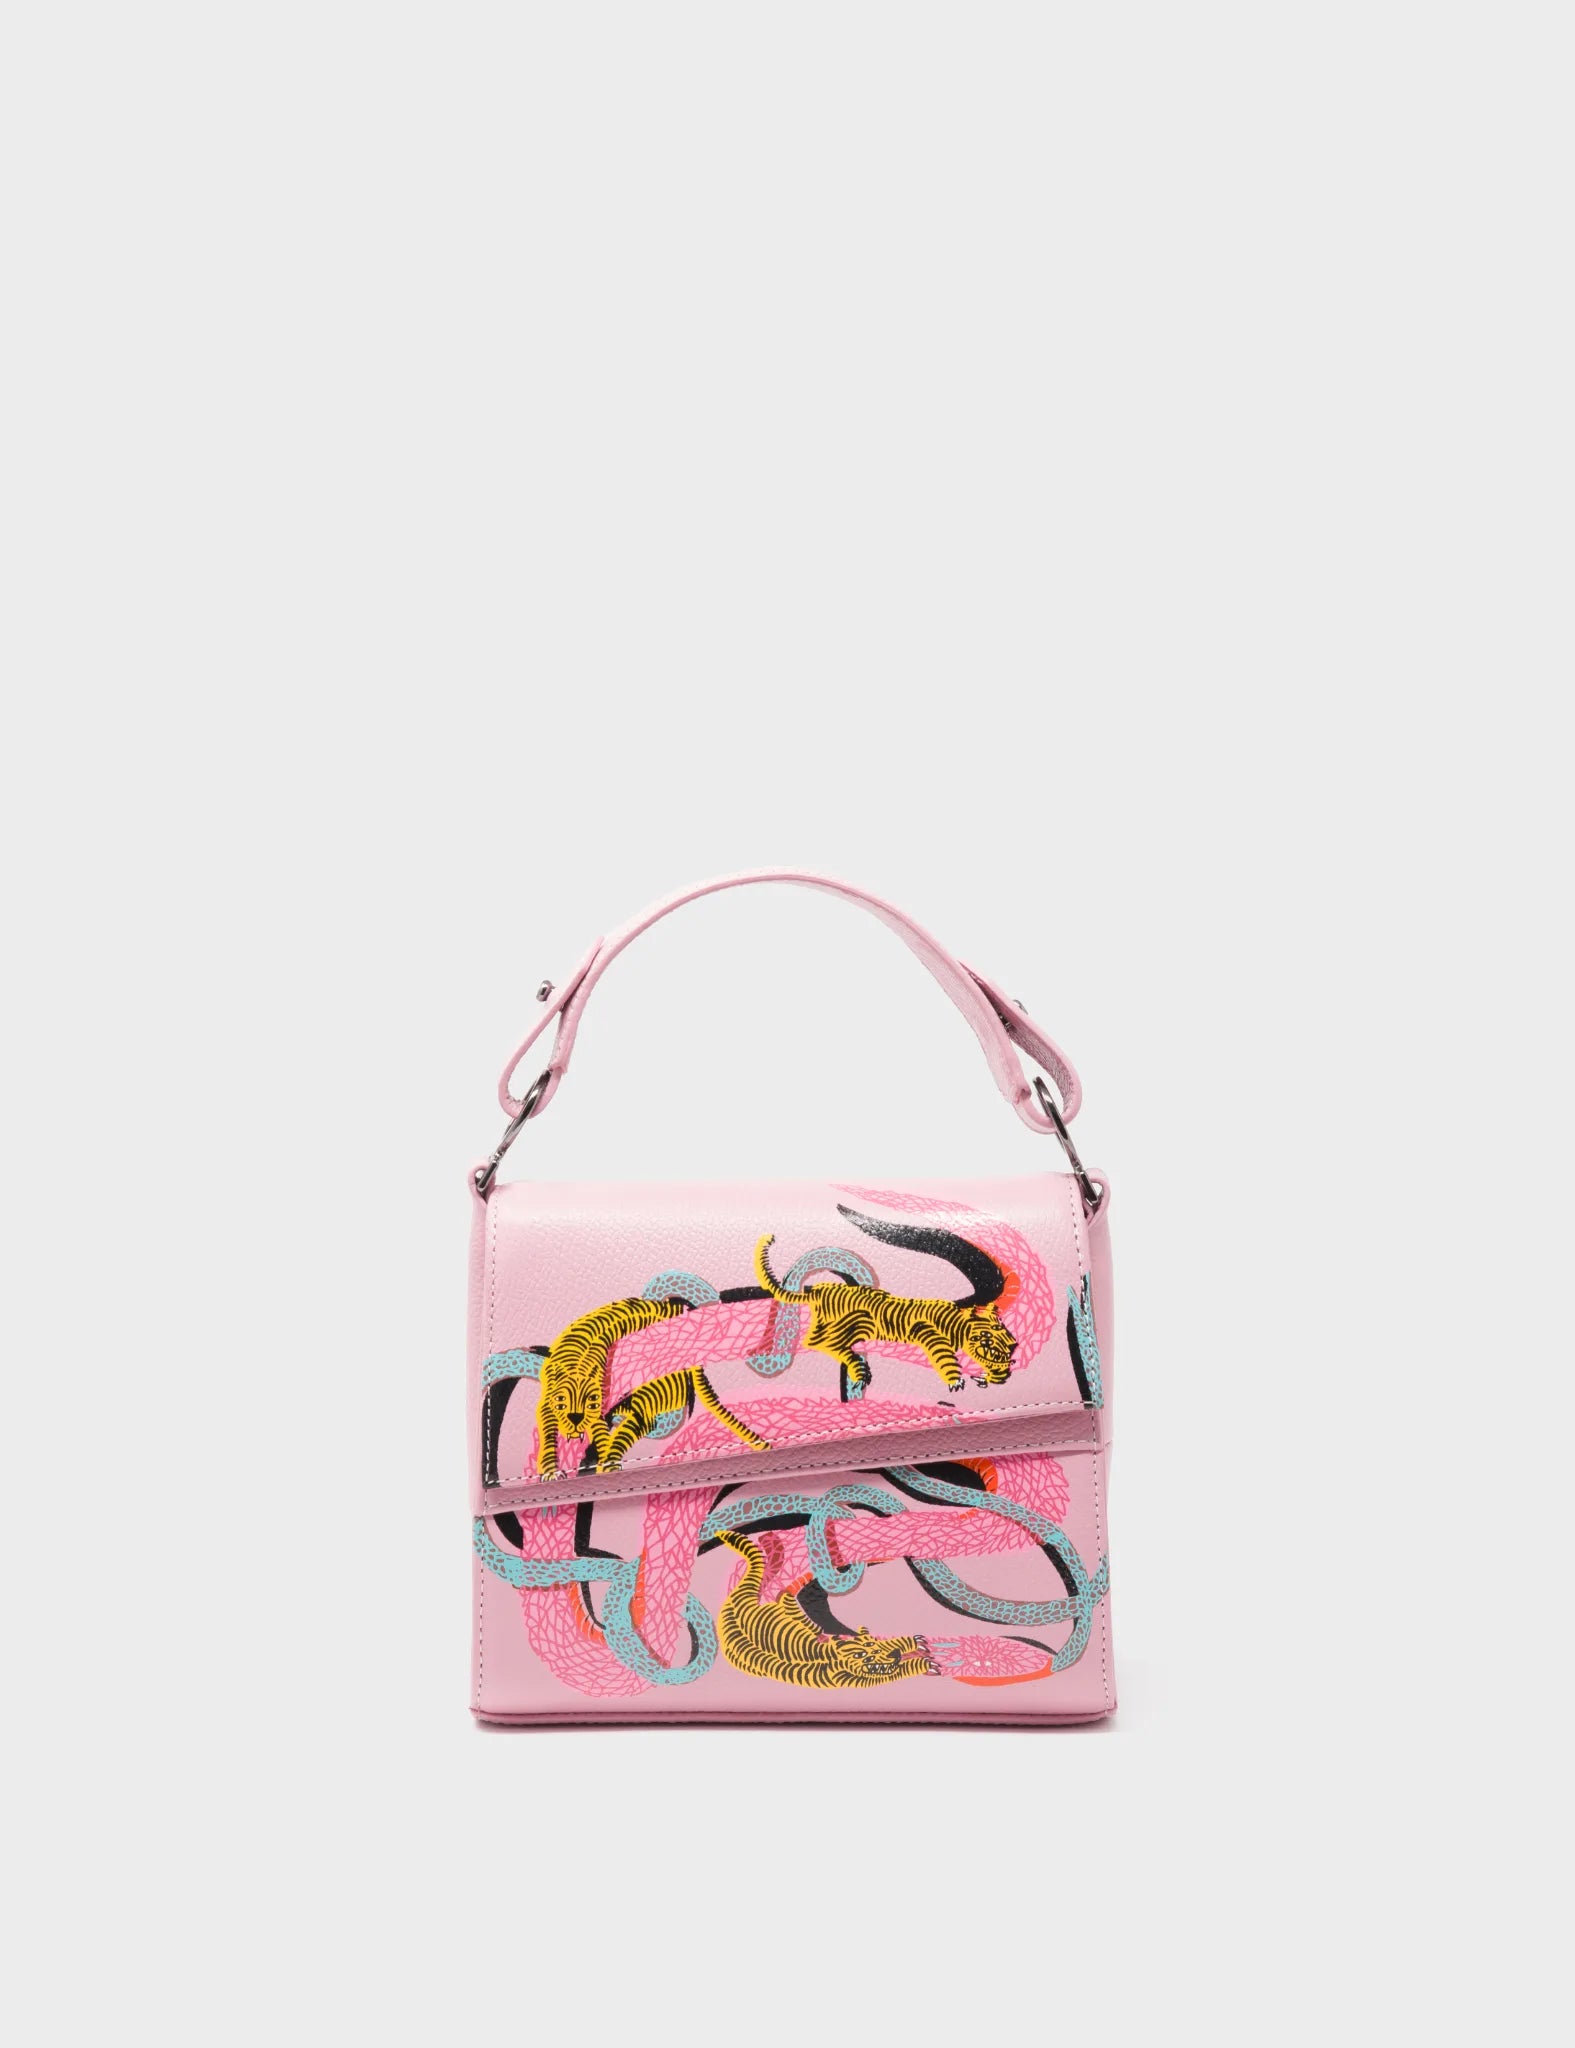 Micro Crossbody Handbag Blush Pink Leather - Tiger and Snake Print - Front